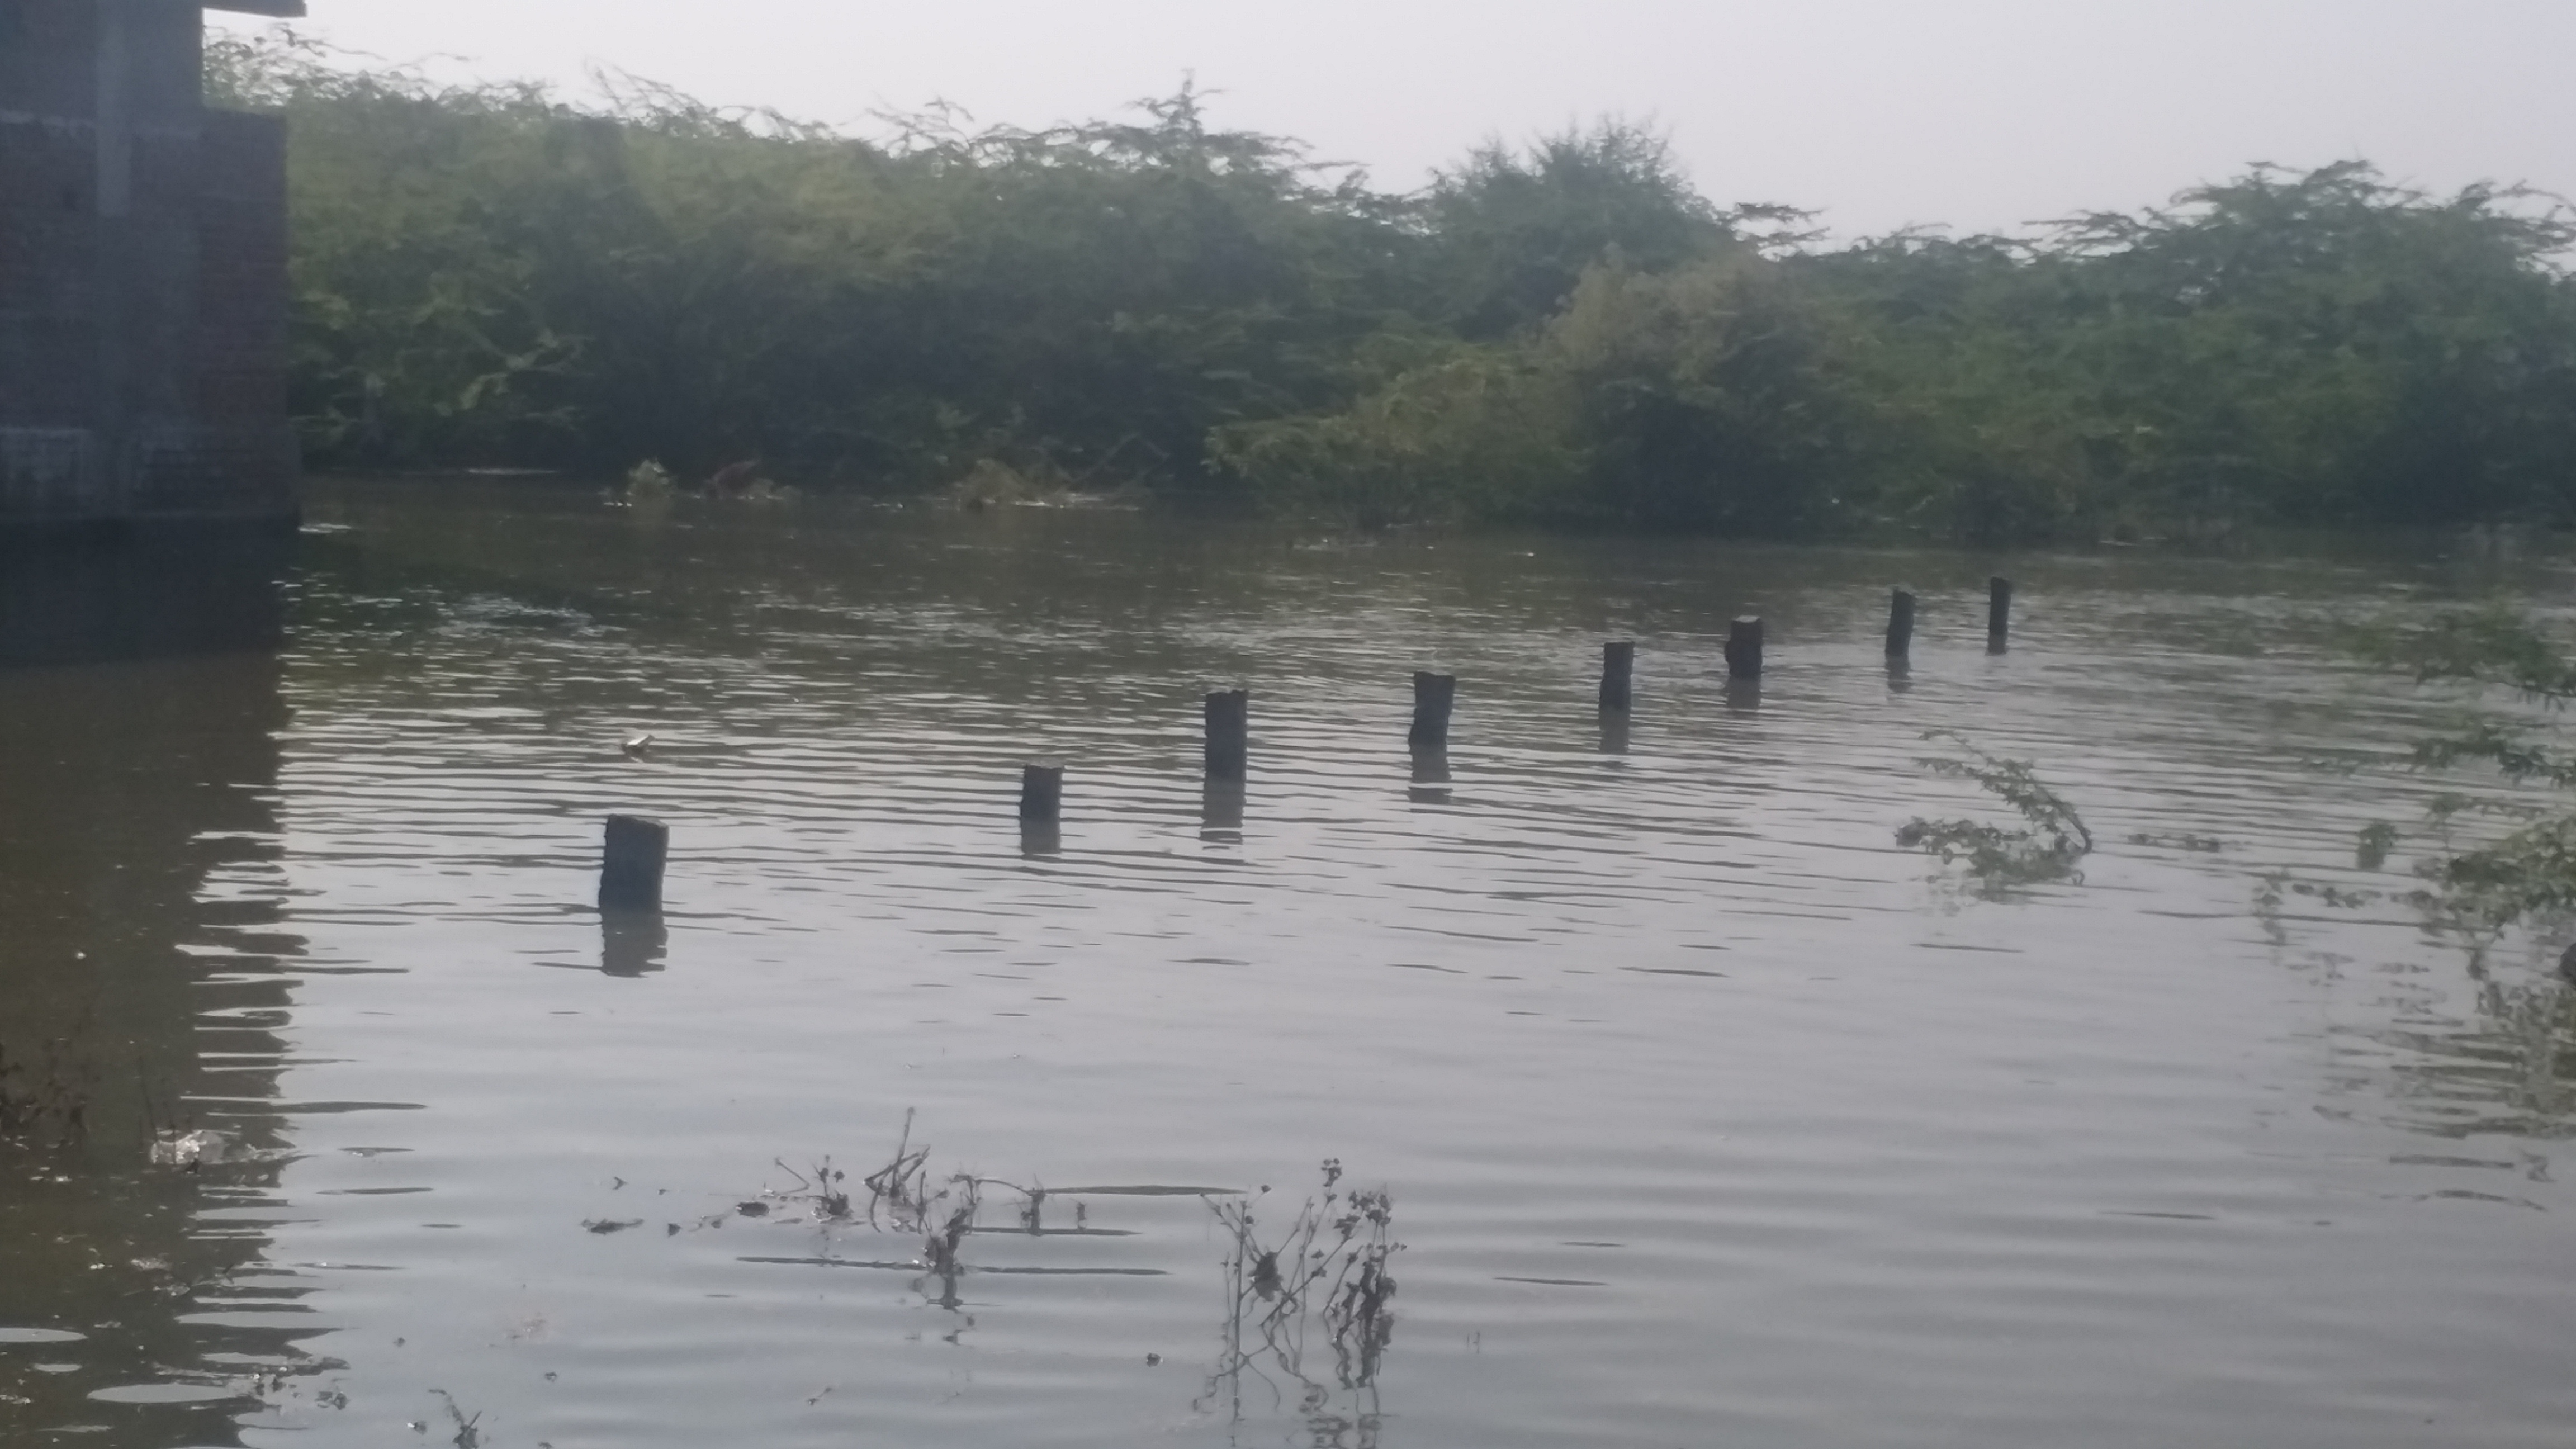 colonies-submerged-by-srsp-canal-flood-at-hanamkonda-in-warangal-urban-district